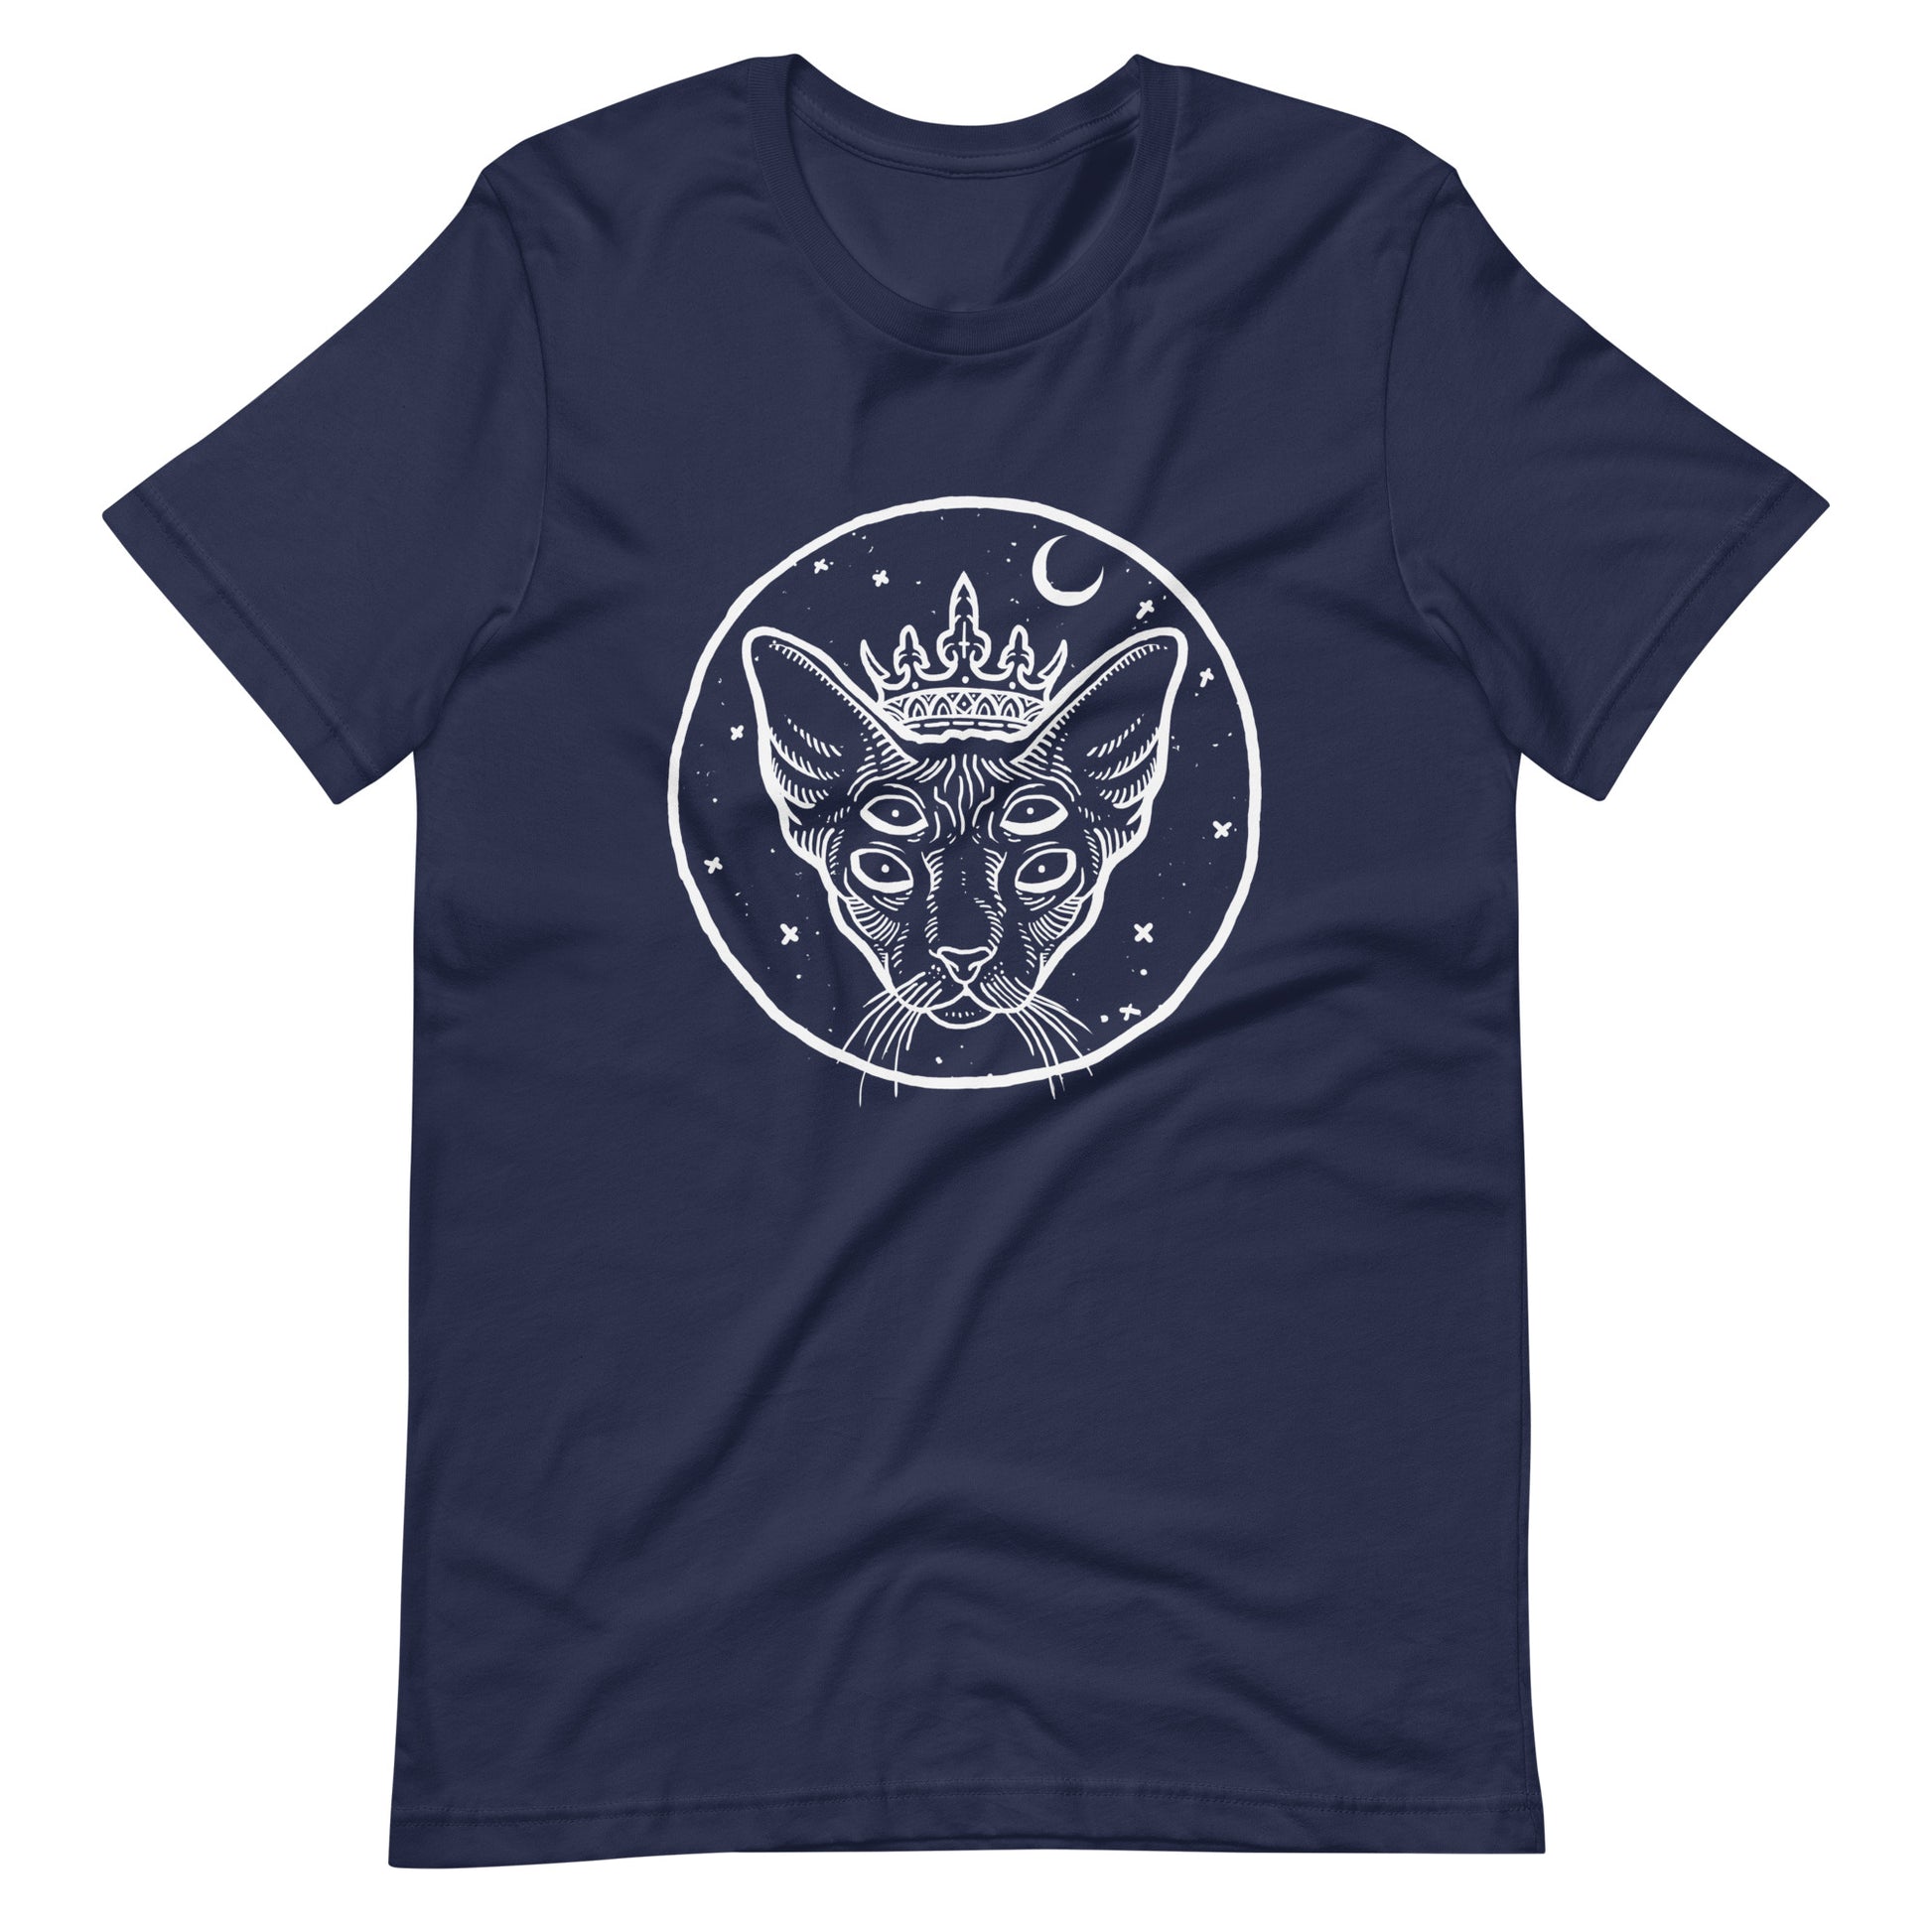 The Ruler - Men's t-shirt - Navy Front